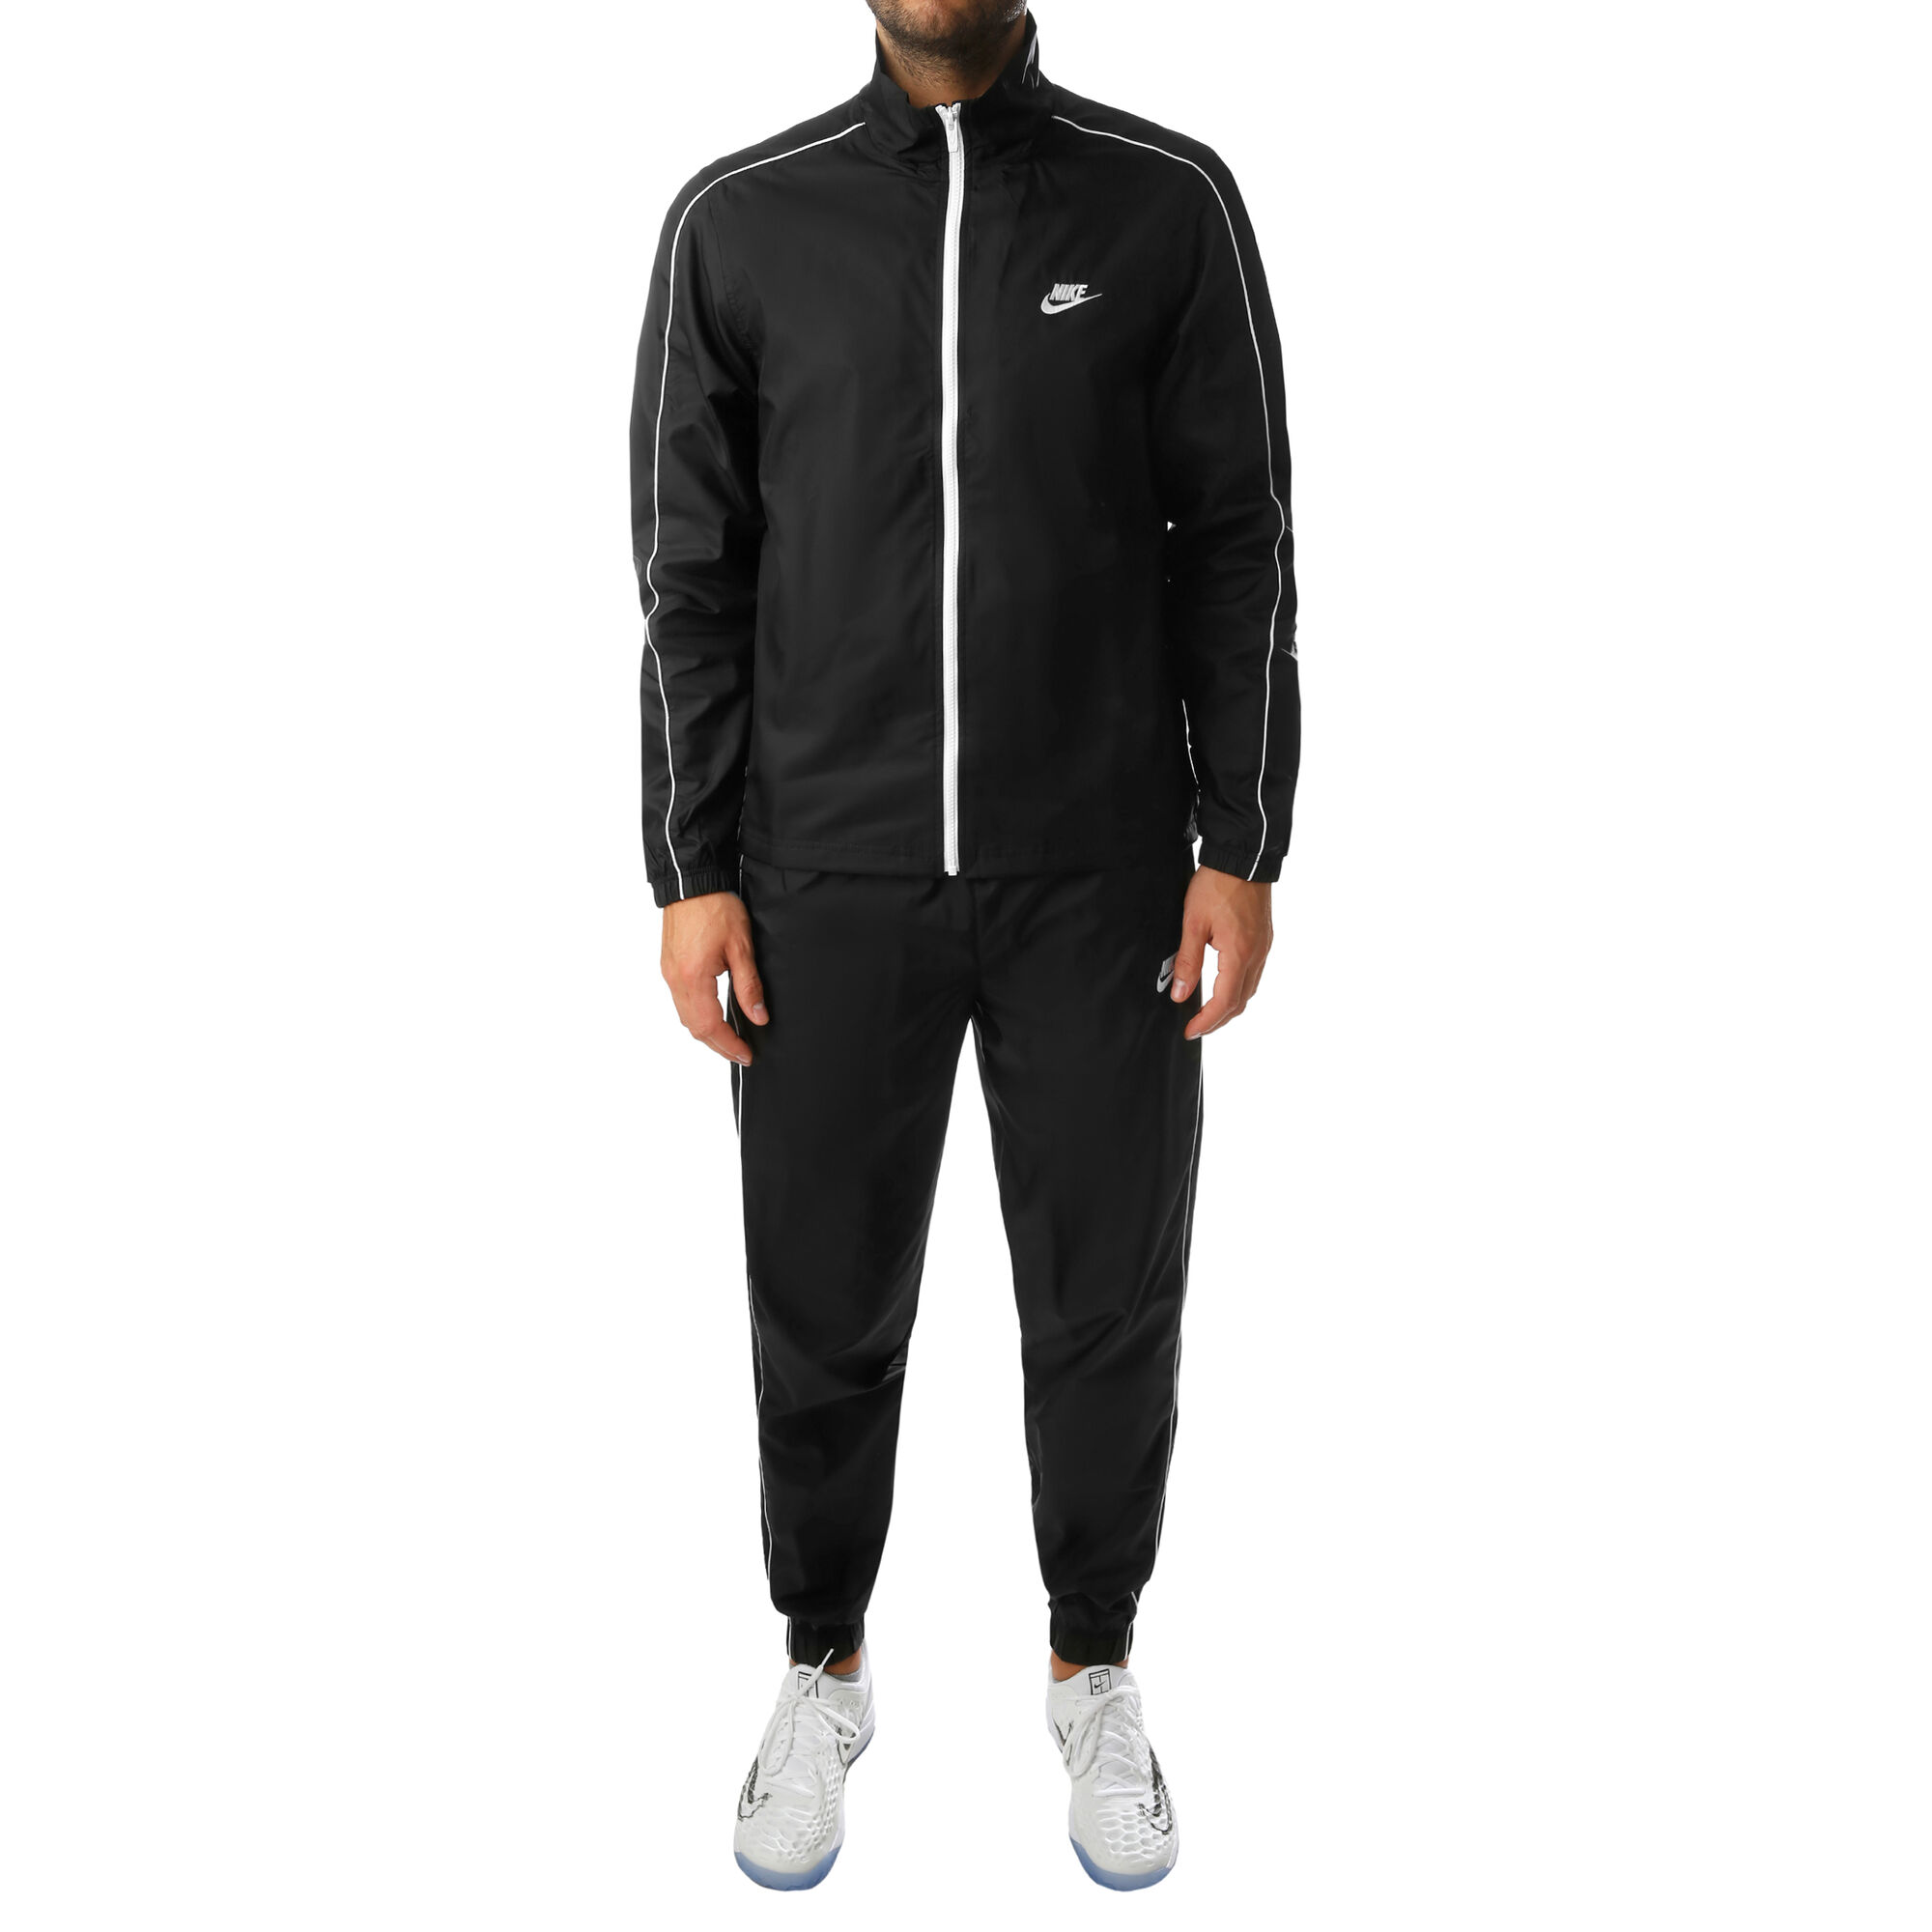 onbetaald fout Reinig de vloer buy Nike Sportswear Woven Tracksuit Men - Black, White online | Tennis-Point